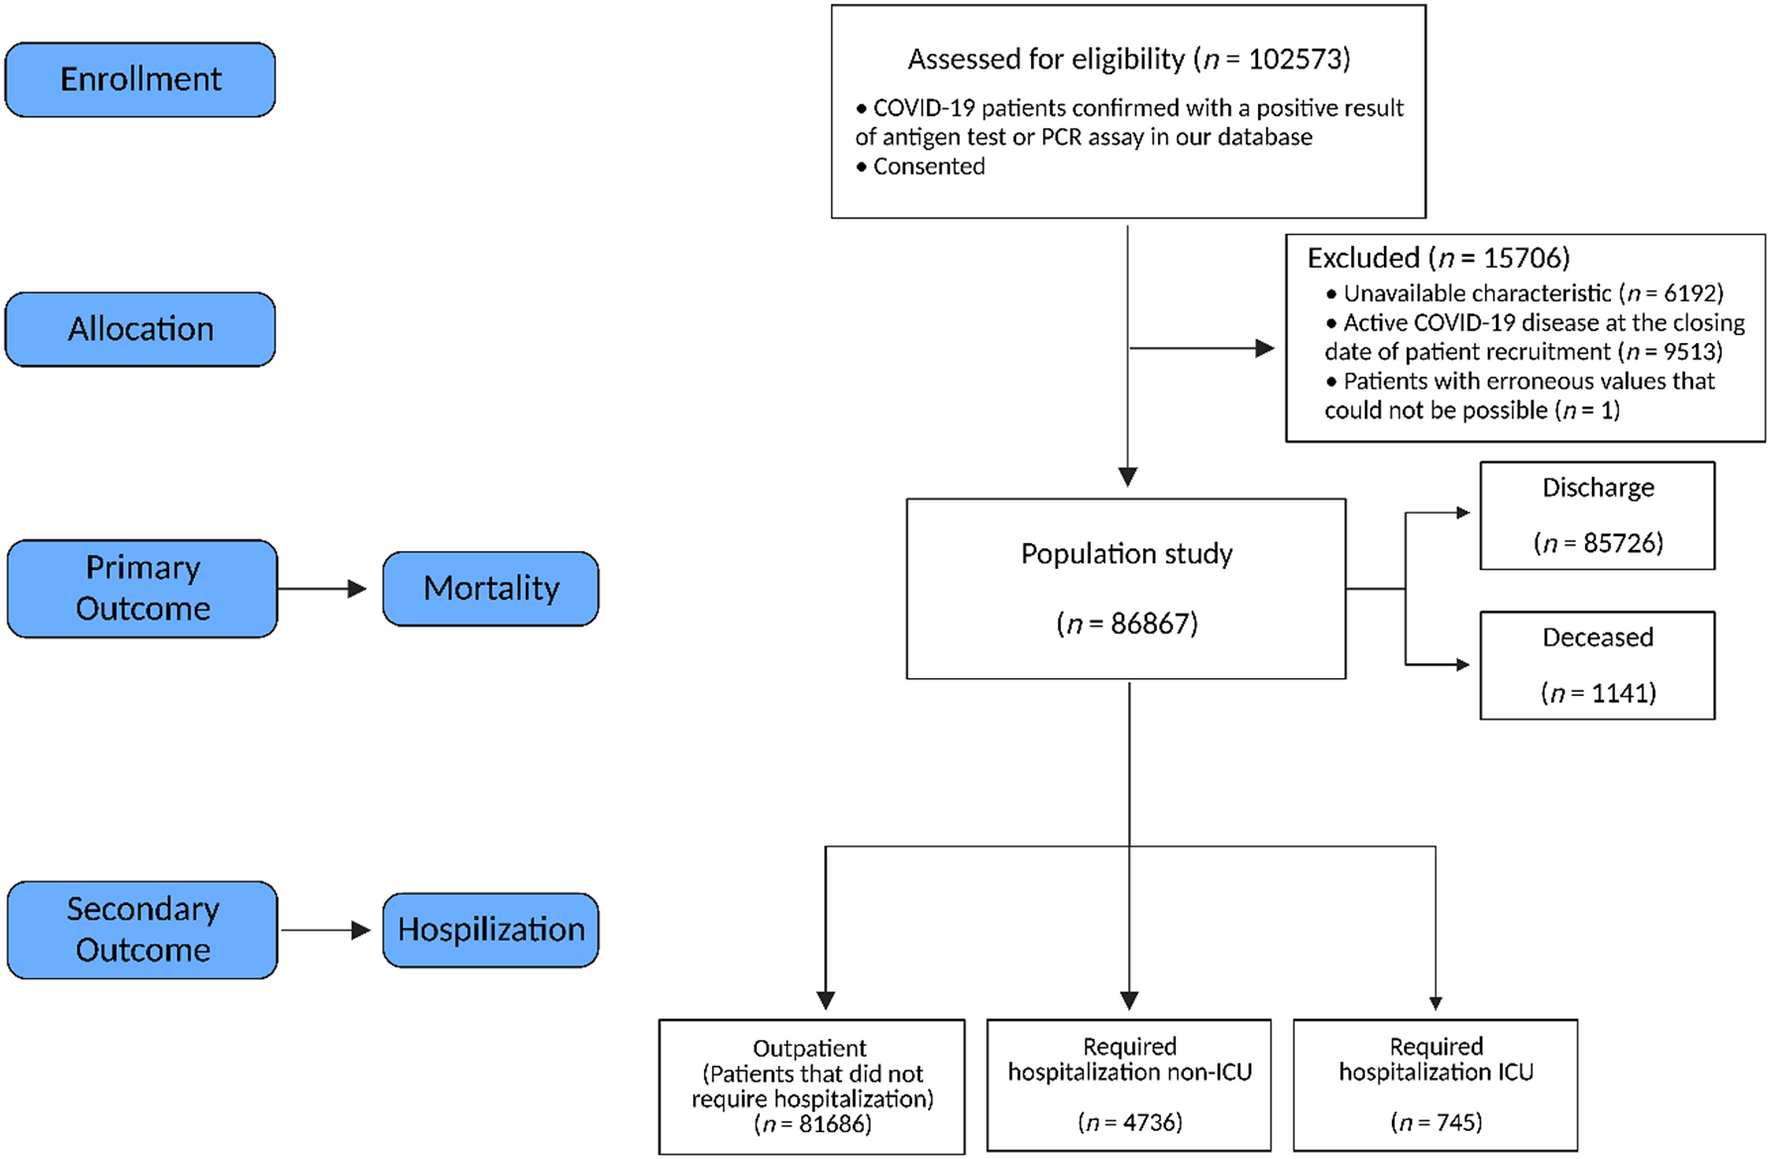 PDF) Admission vital signs as predictors of COVID-19 mortality: a